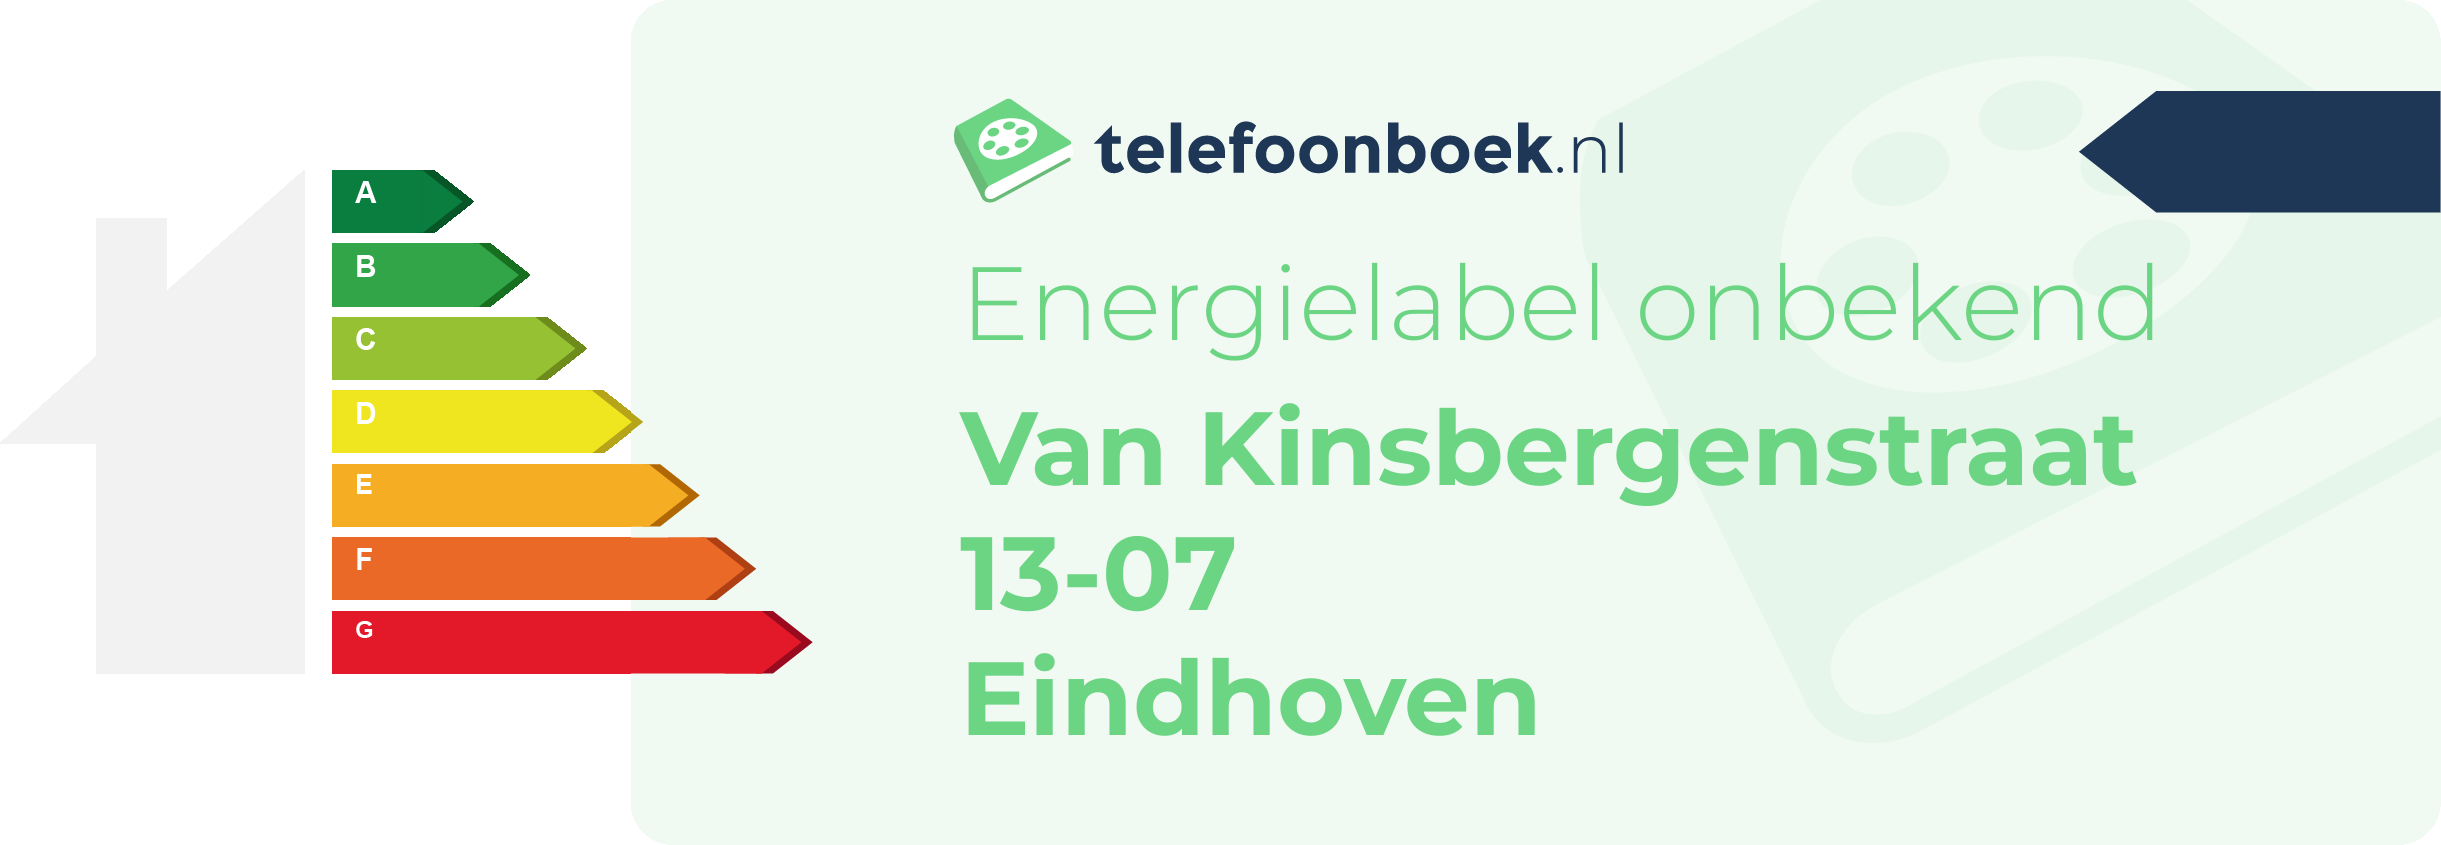 Energielabel Van Kinsbergenstraat 13-07 Eindhoven